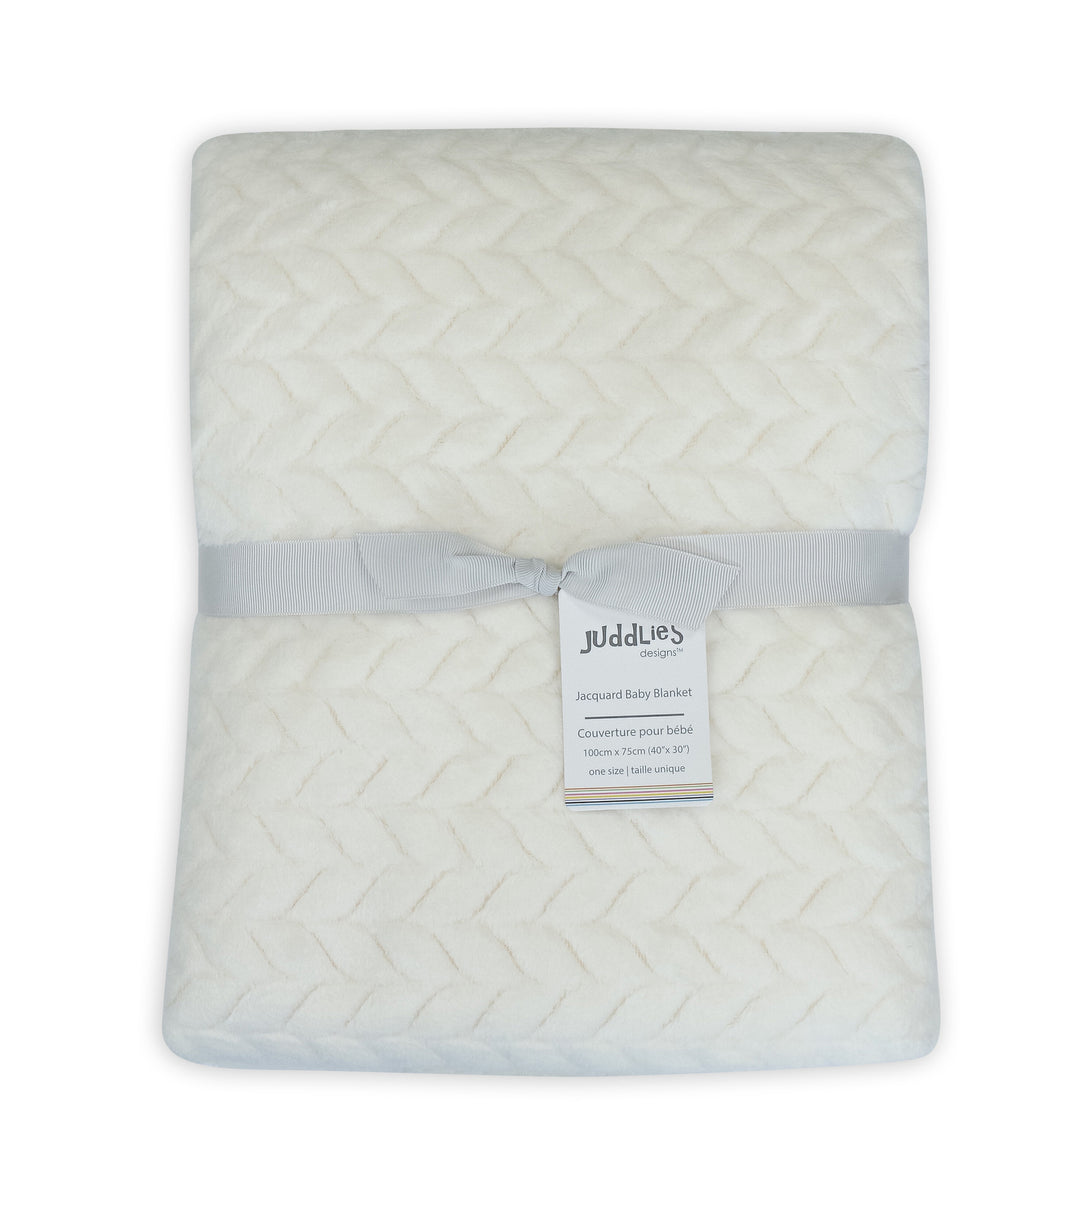 Juddlies - Jacquard Flannel Blanket - Cream Jacquard Flannel Blanket - Cream 821436011206